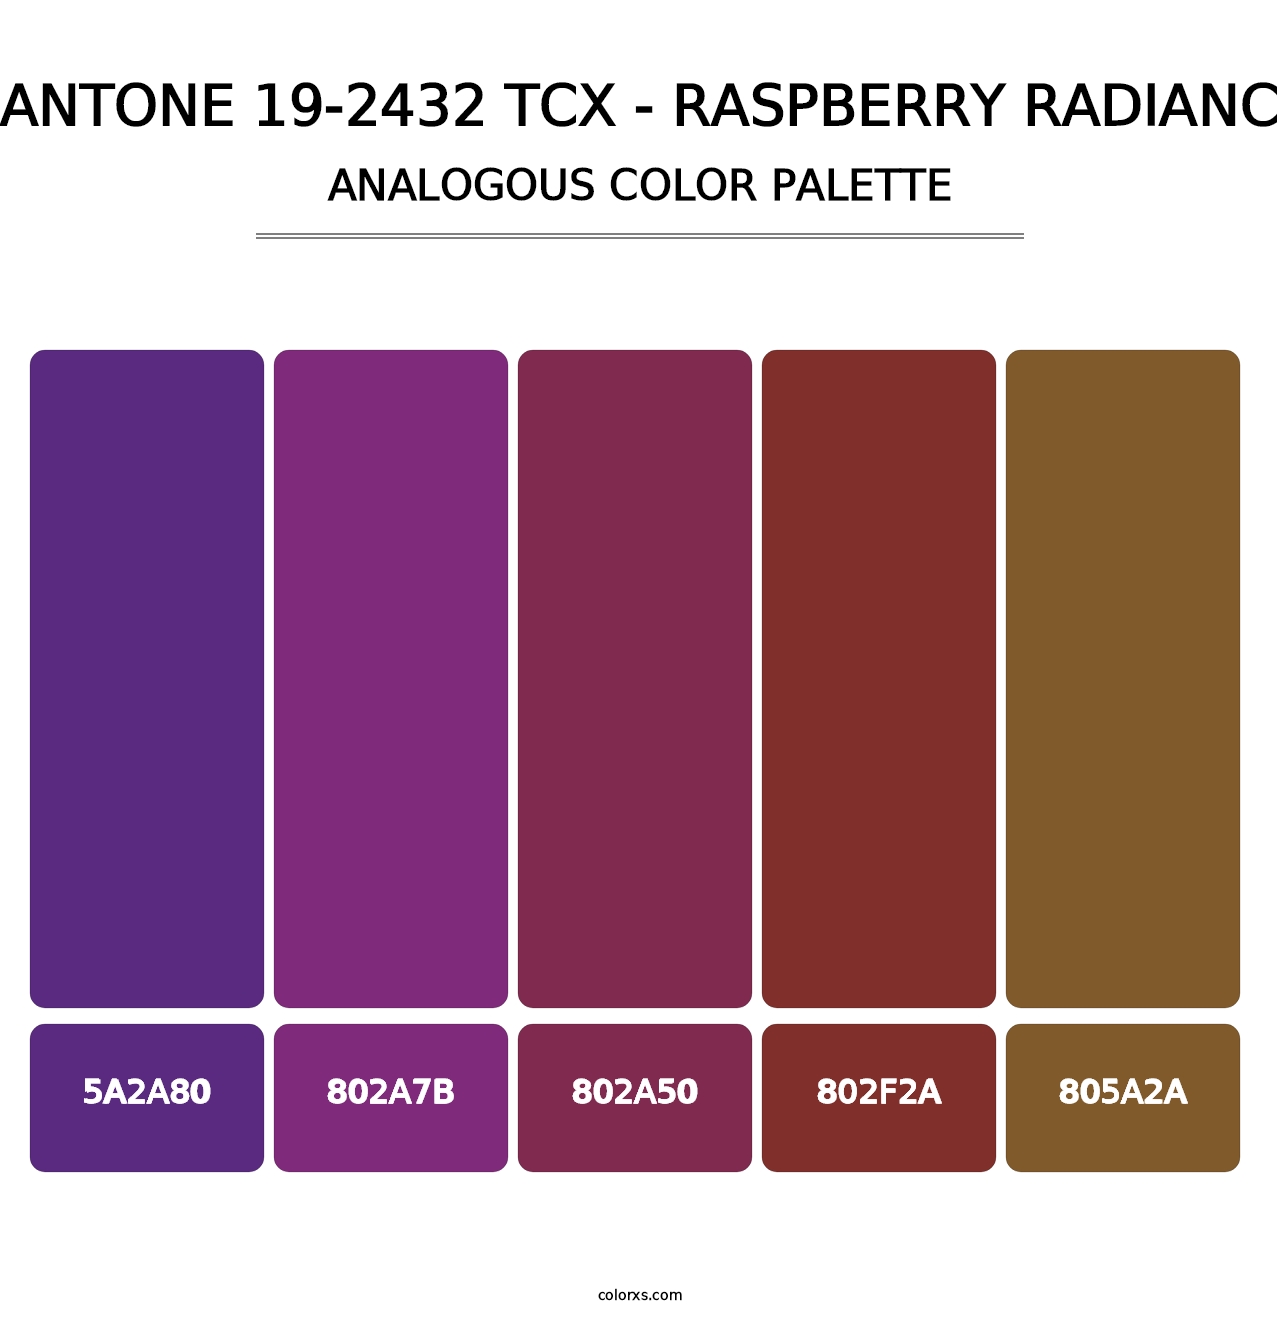 PANTONE 19-2432 TCX - Raspberry Radiance - Analogous Color Palette